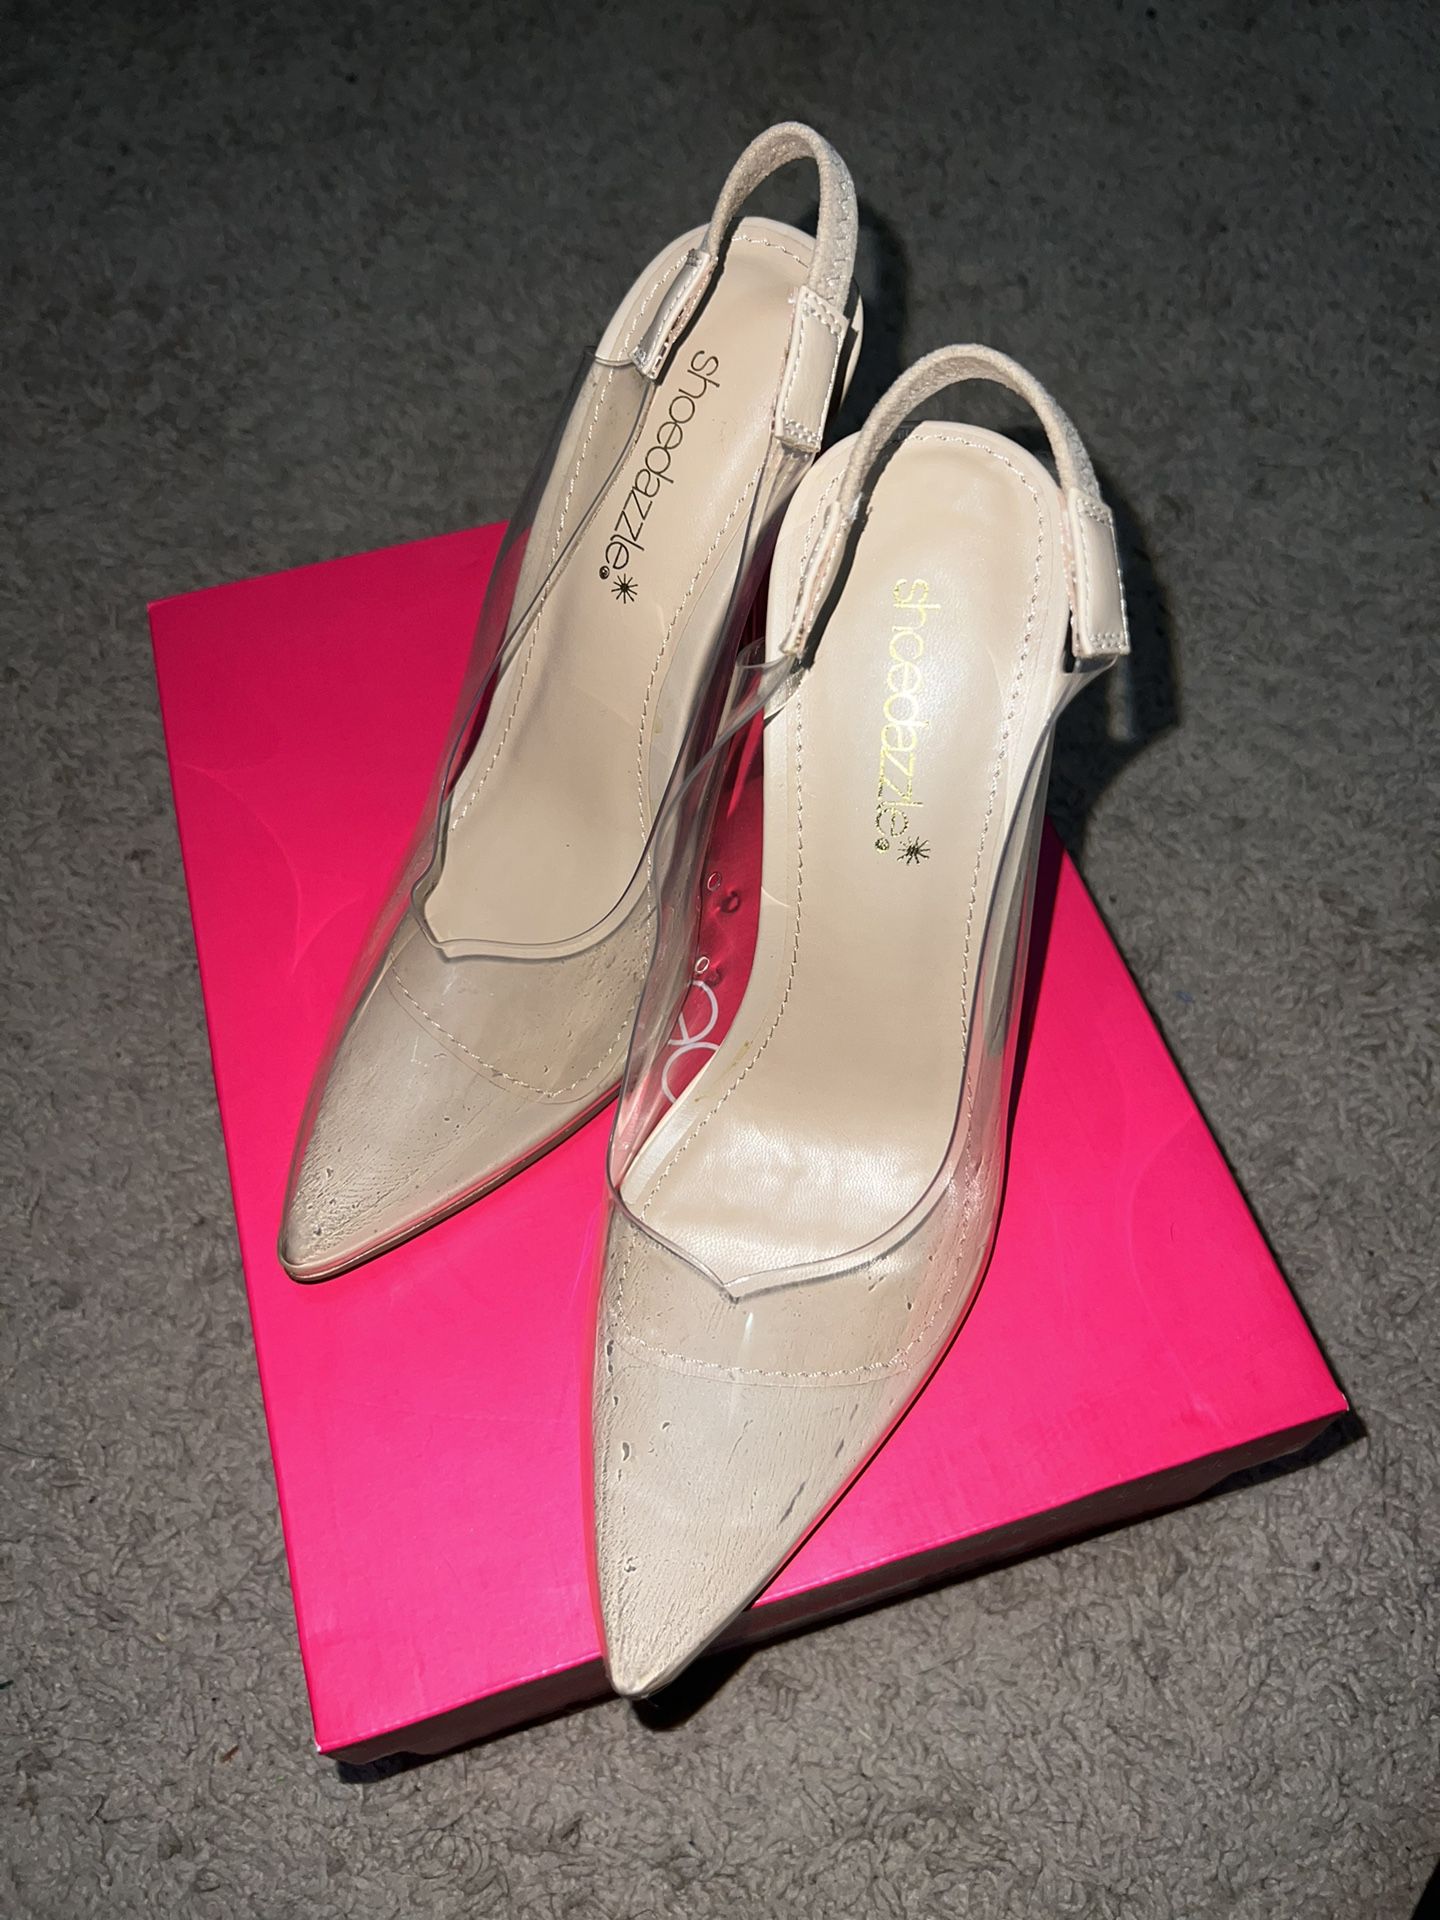 Iridescent/ Clear heels 